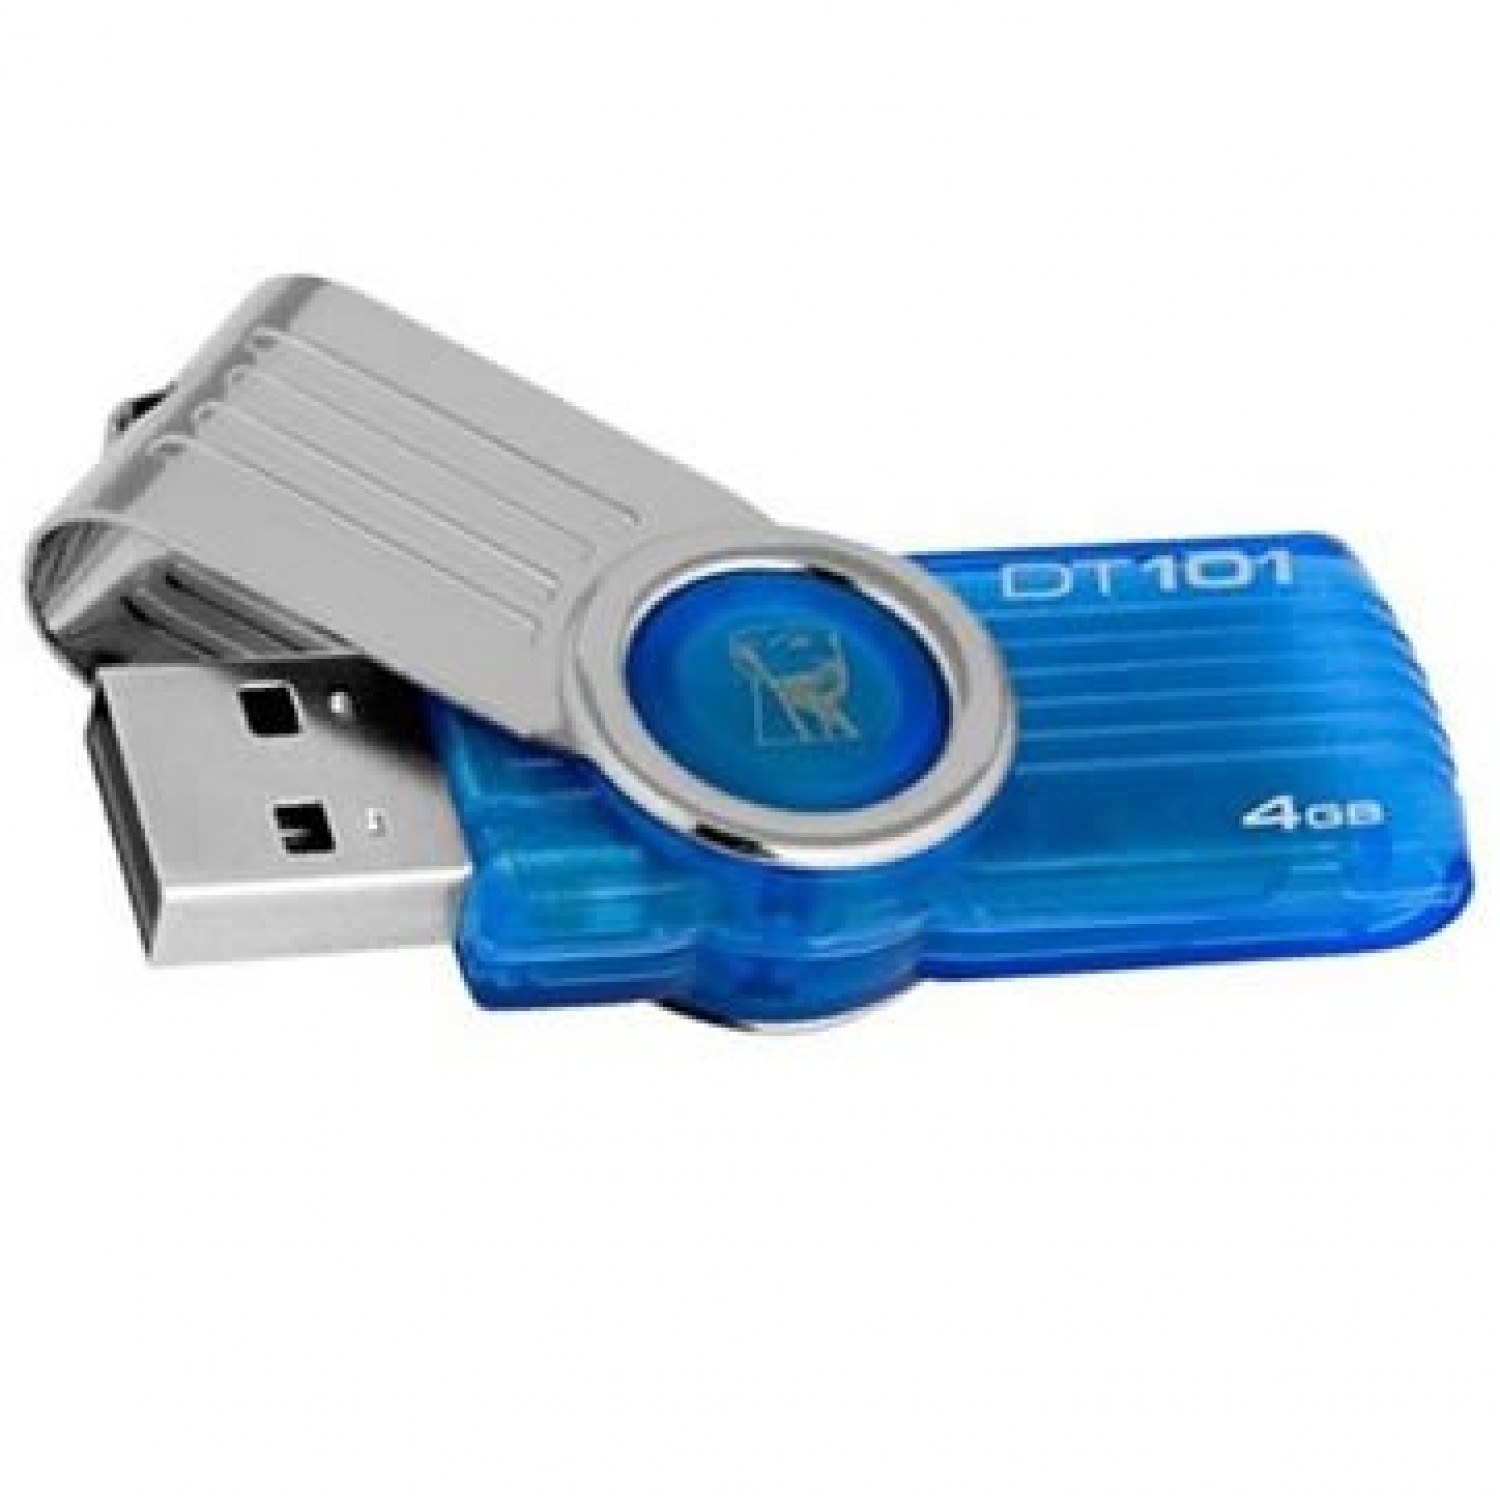 comestible Marcha mala Aparte Memoria USB Kingston de 4GB (DT101G2) - Marca Kingston - Capital Colombia